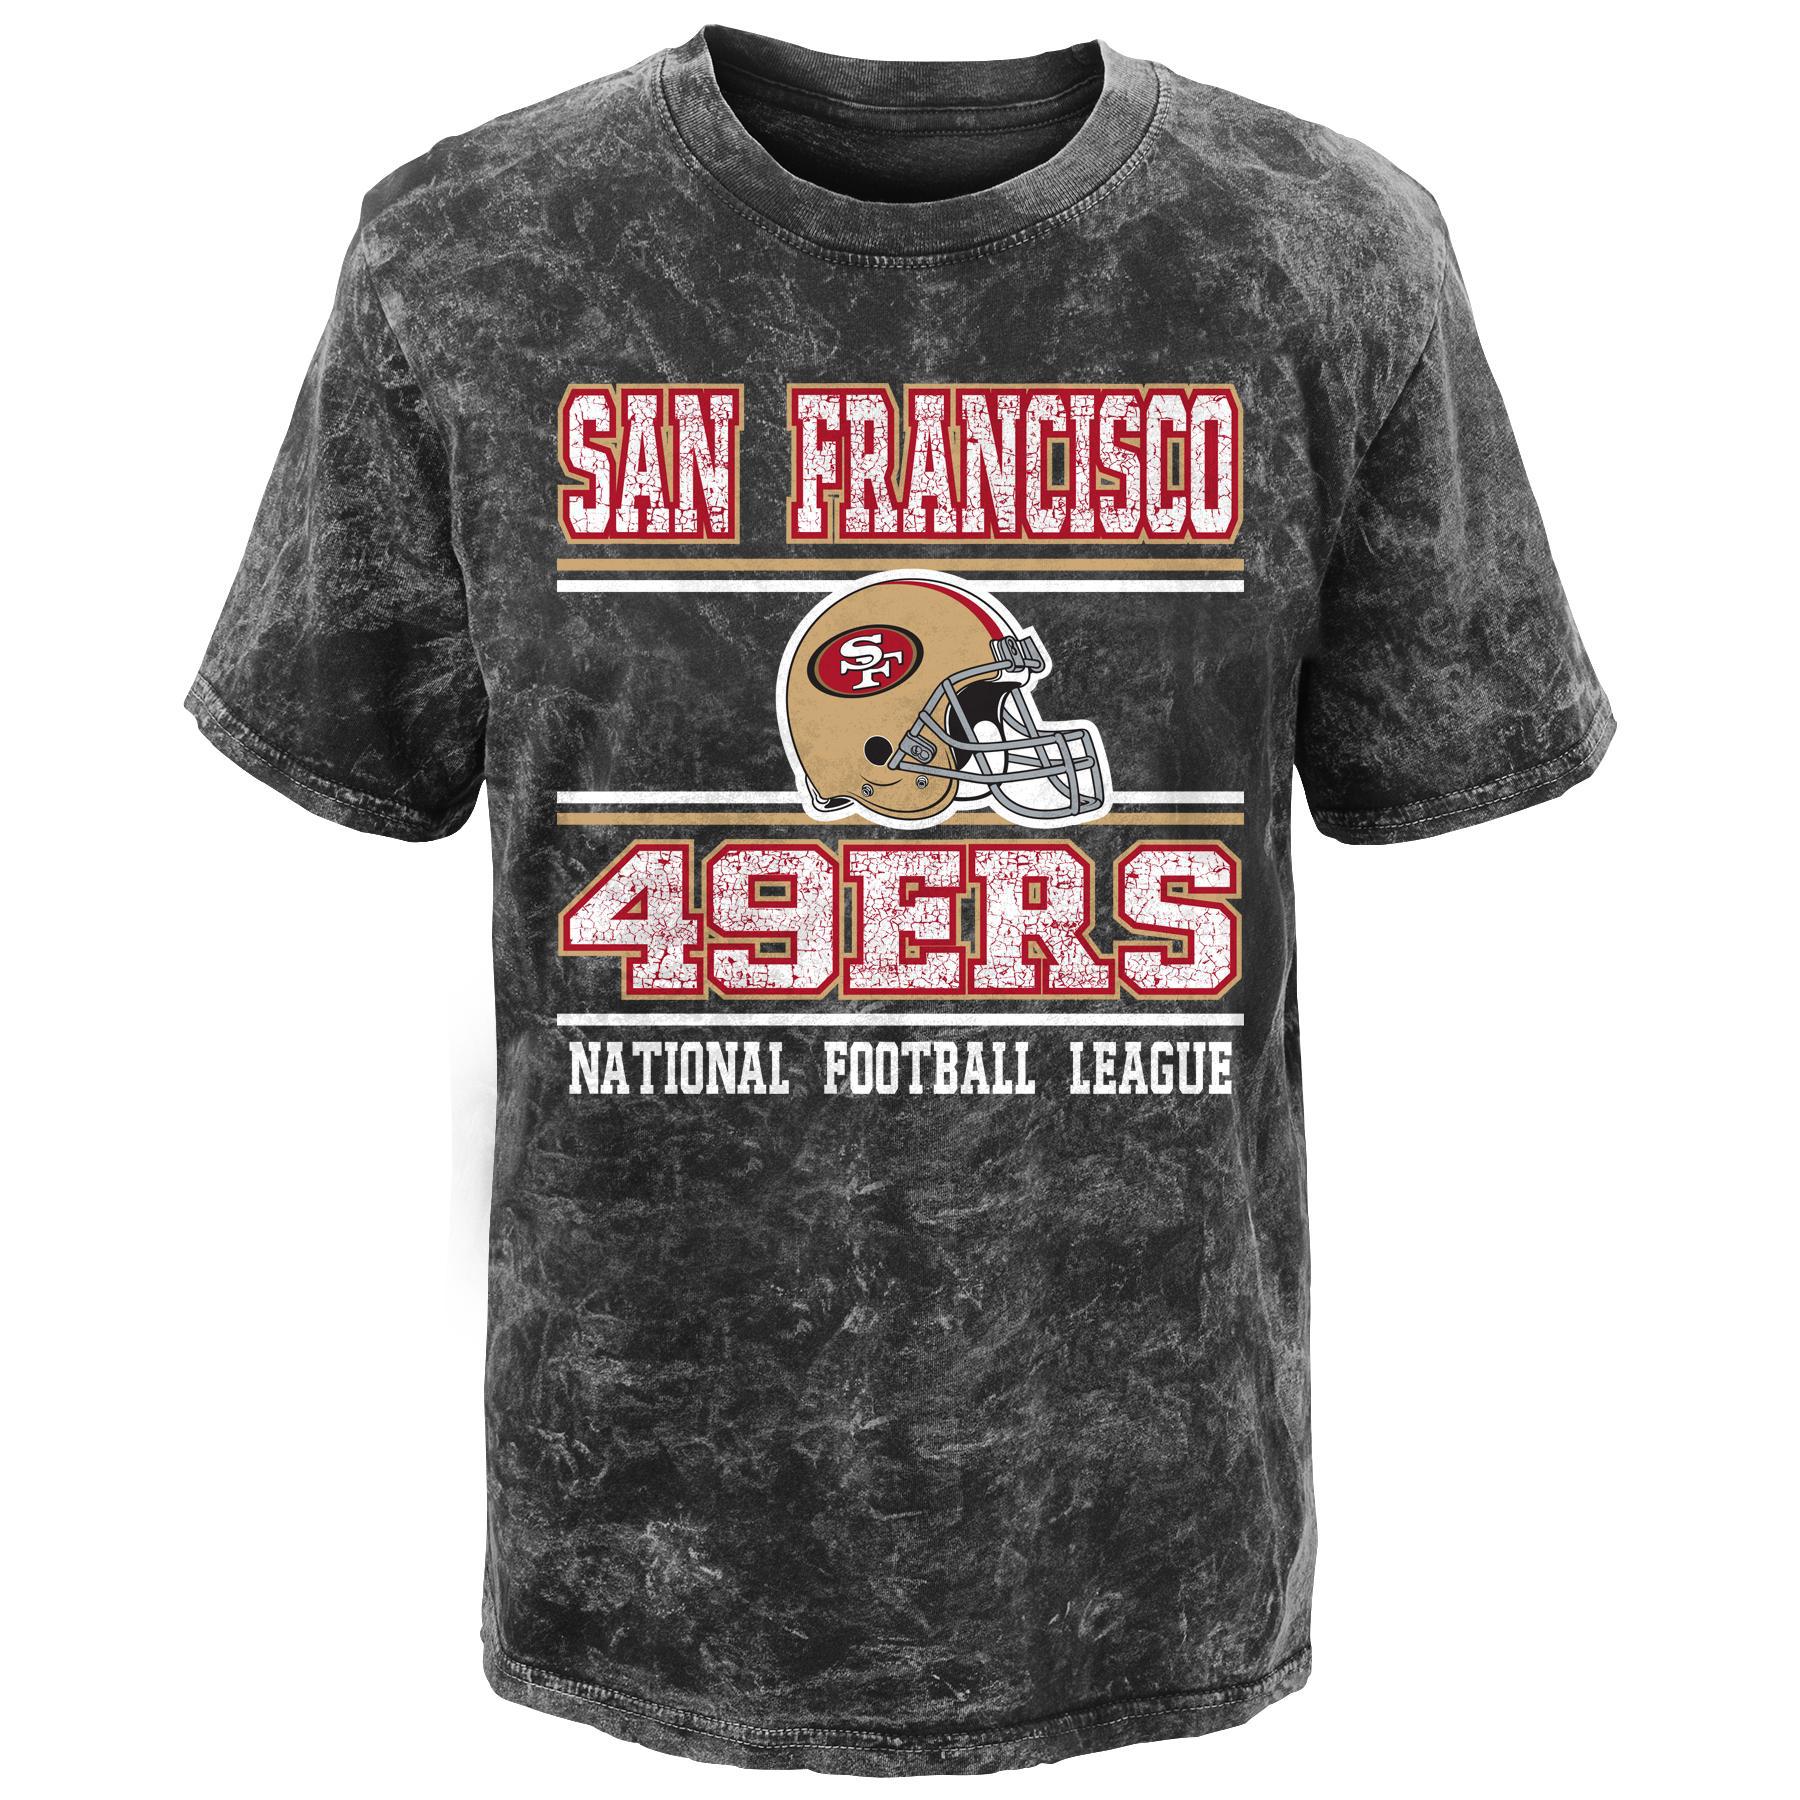 NFL Boys' Graphic T-Shirt - San Francisco 49ers